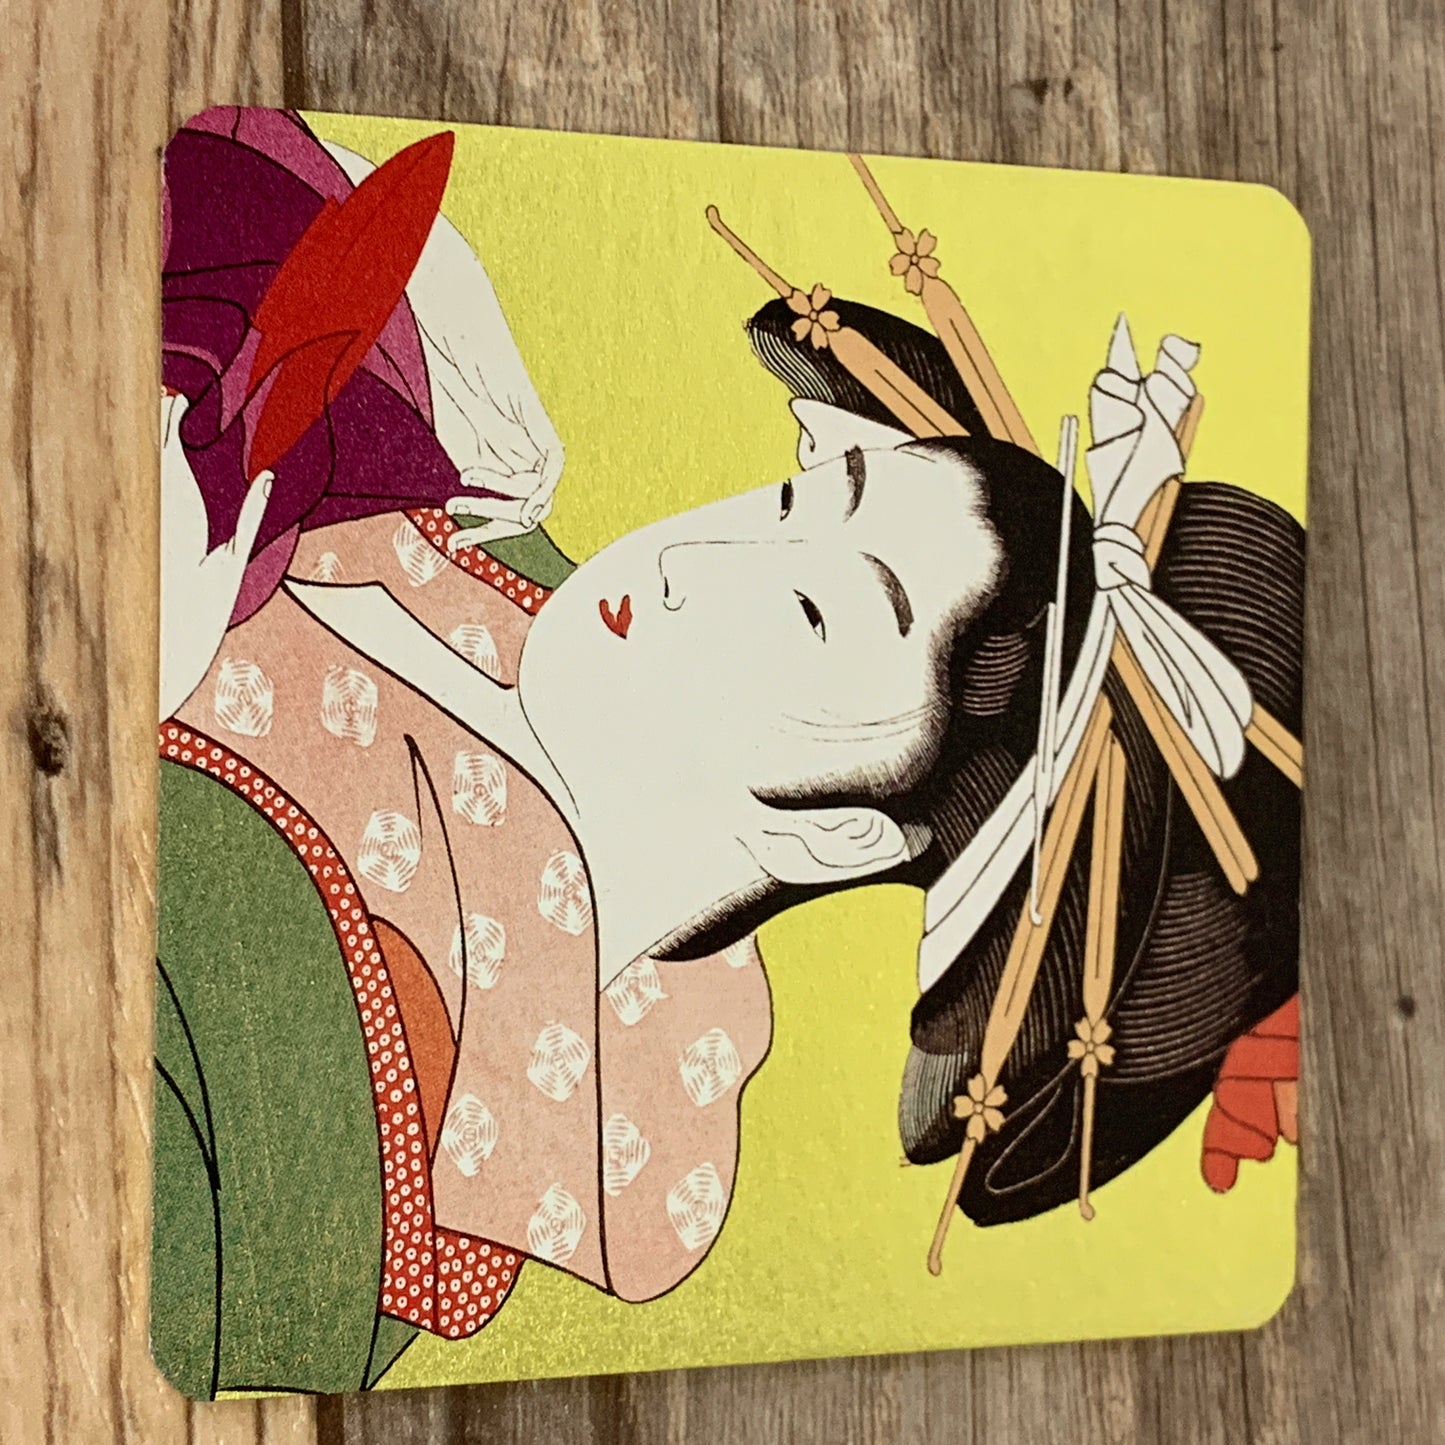 Yukiyoe Japanese Genre Picture Coasters Boxed Set of 8 Cardboard Coasters